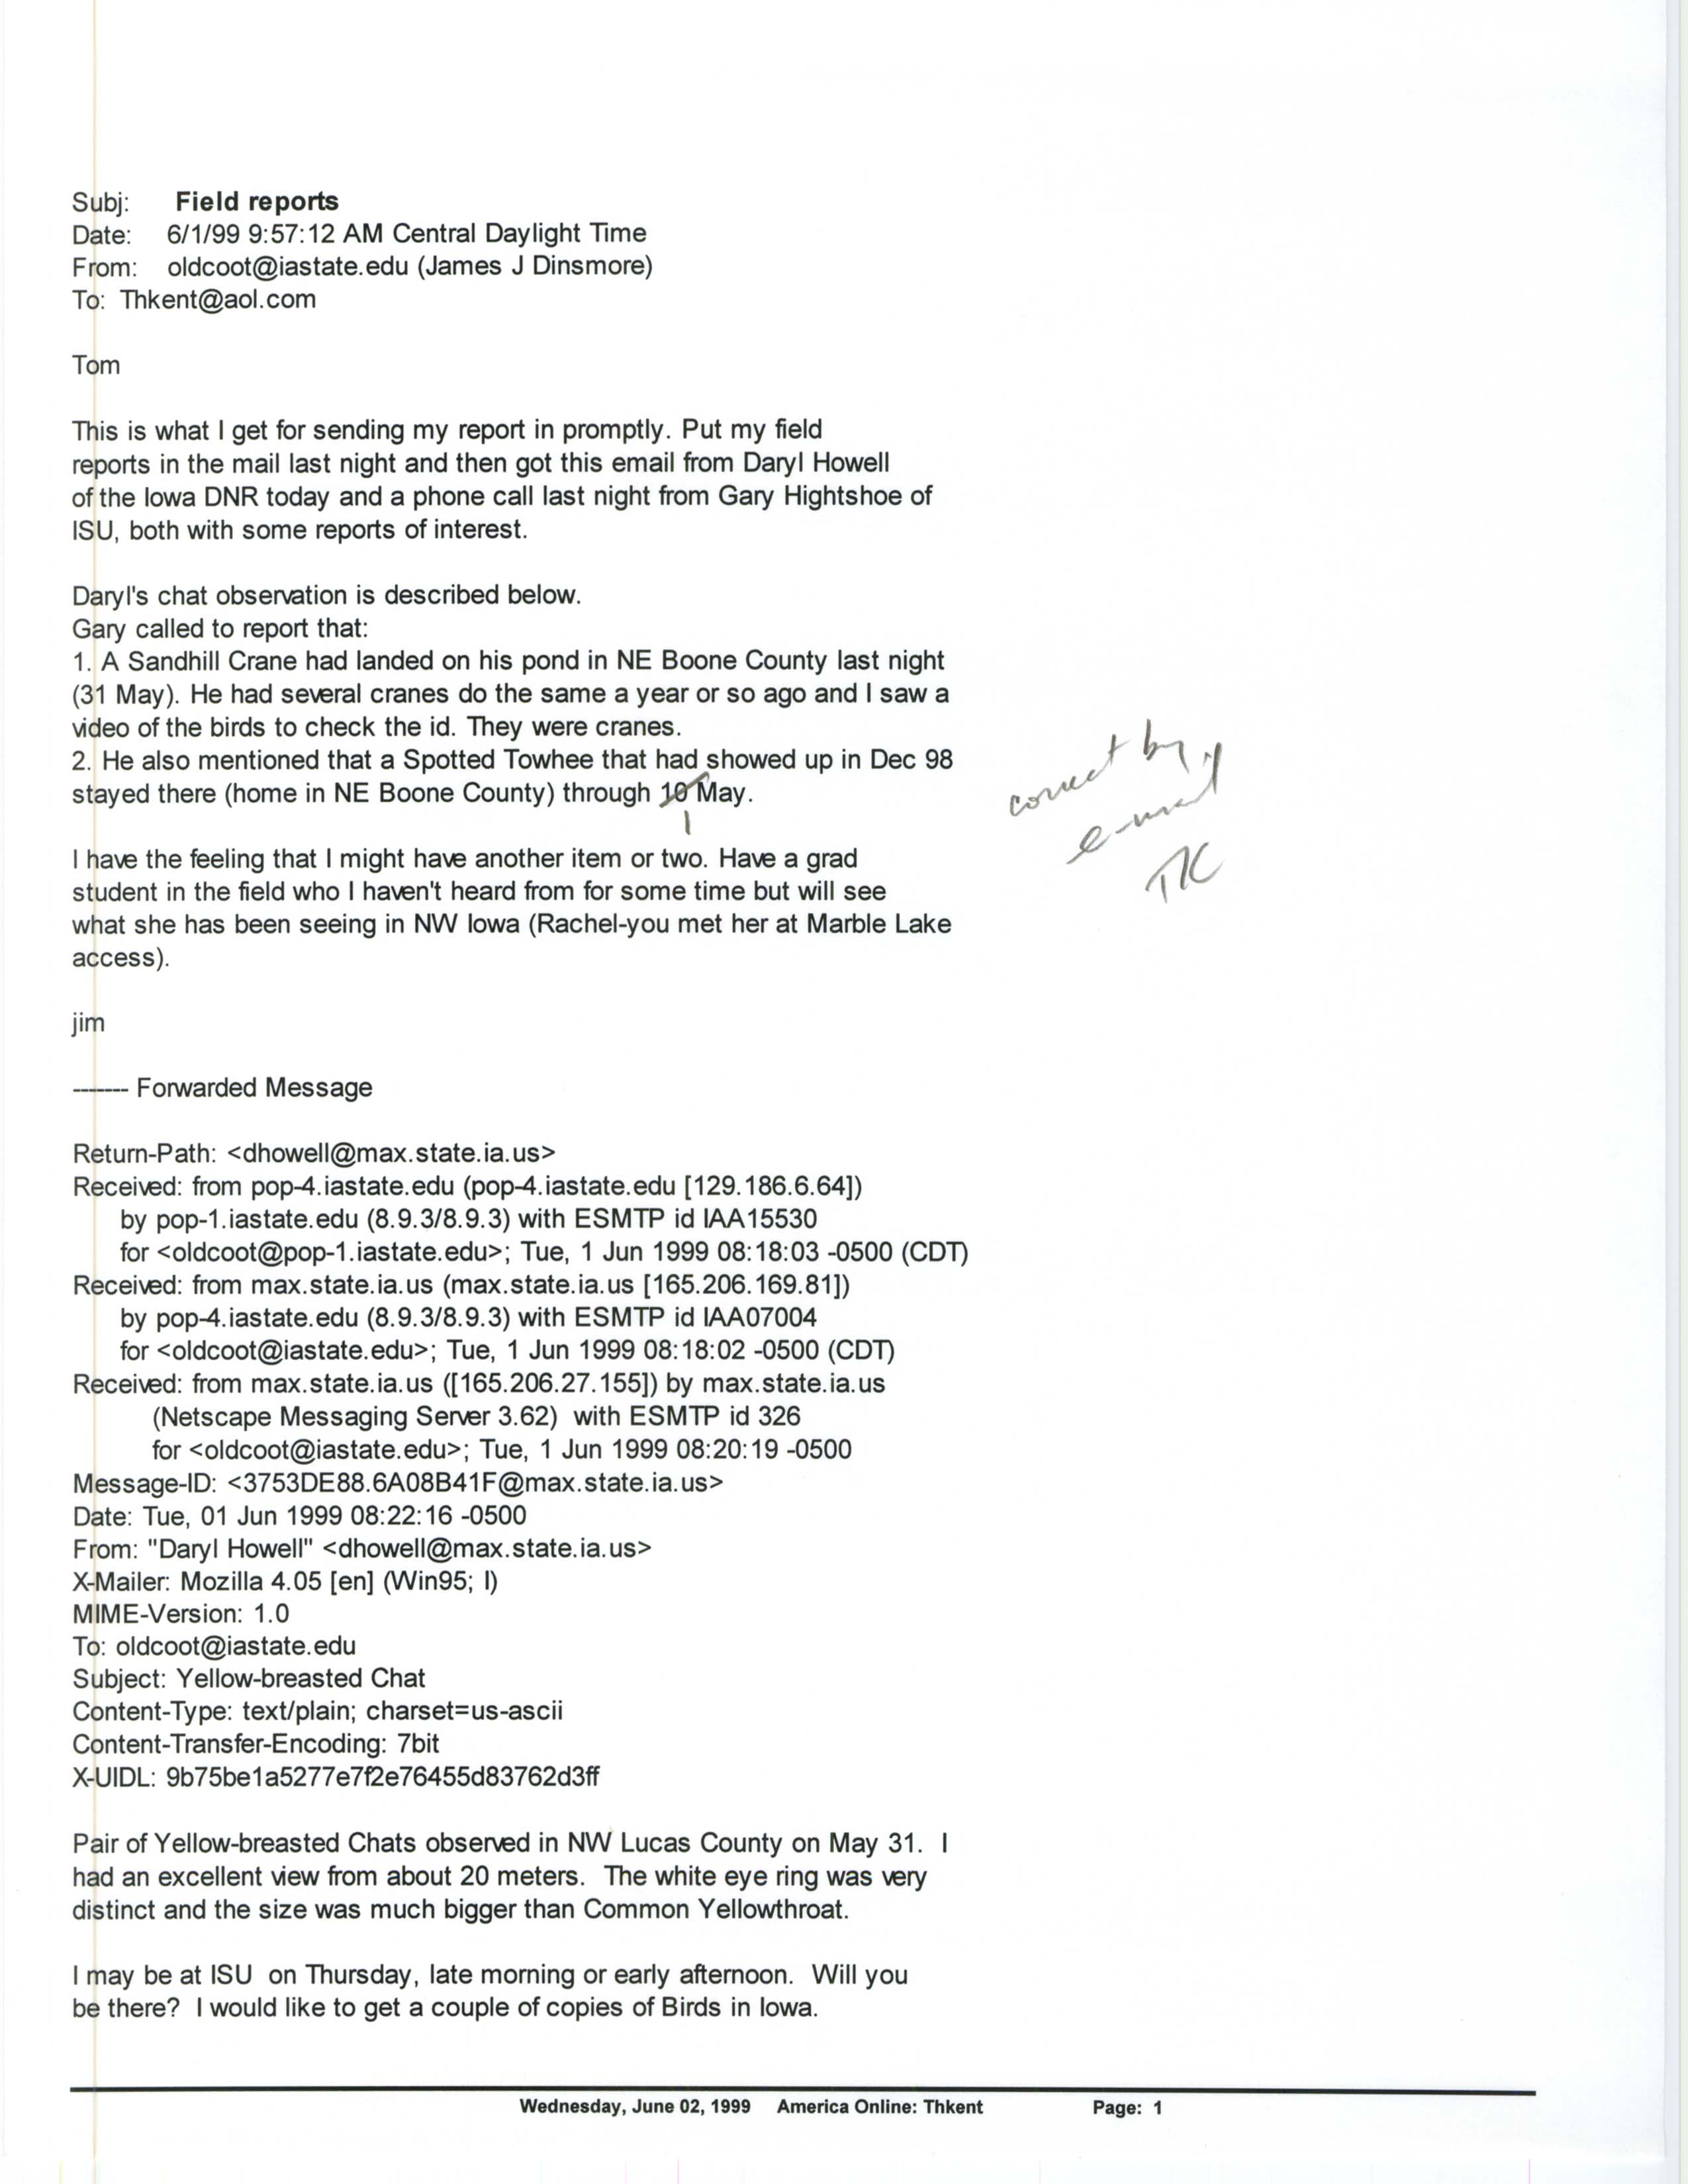 Jim Dinsmore email to Thomas Kent regarding field reports, June 1, 1999